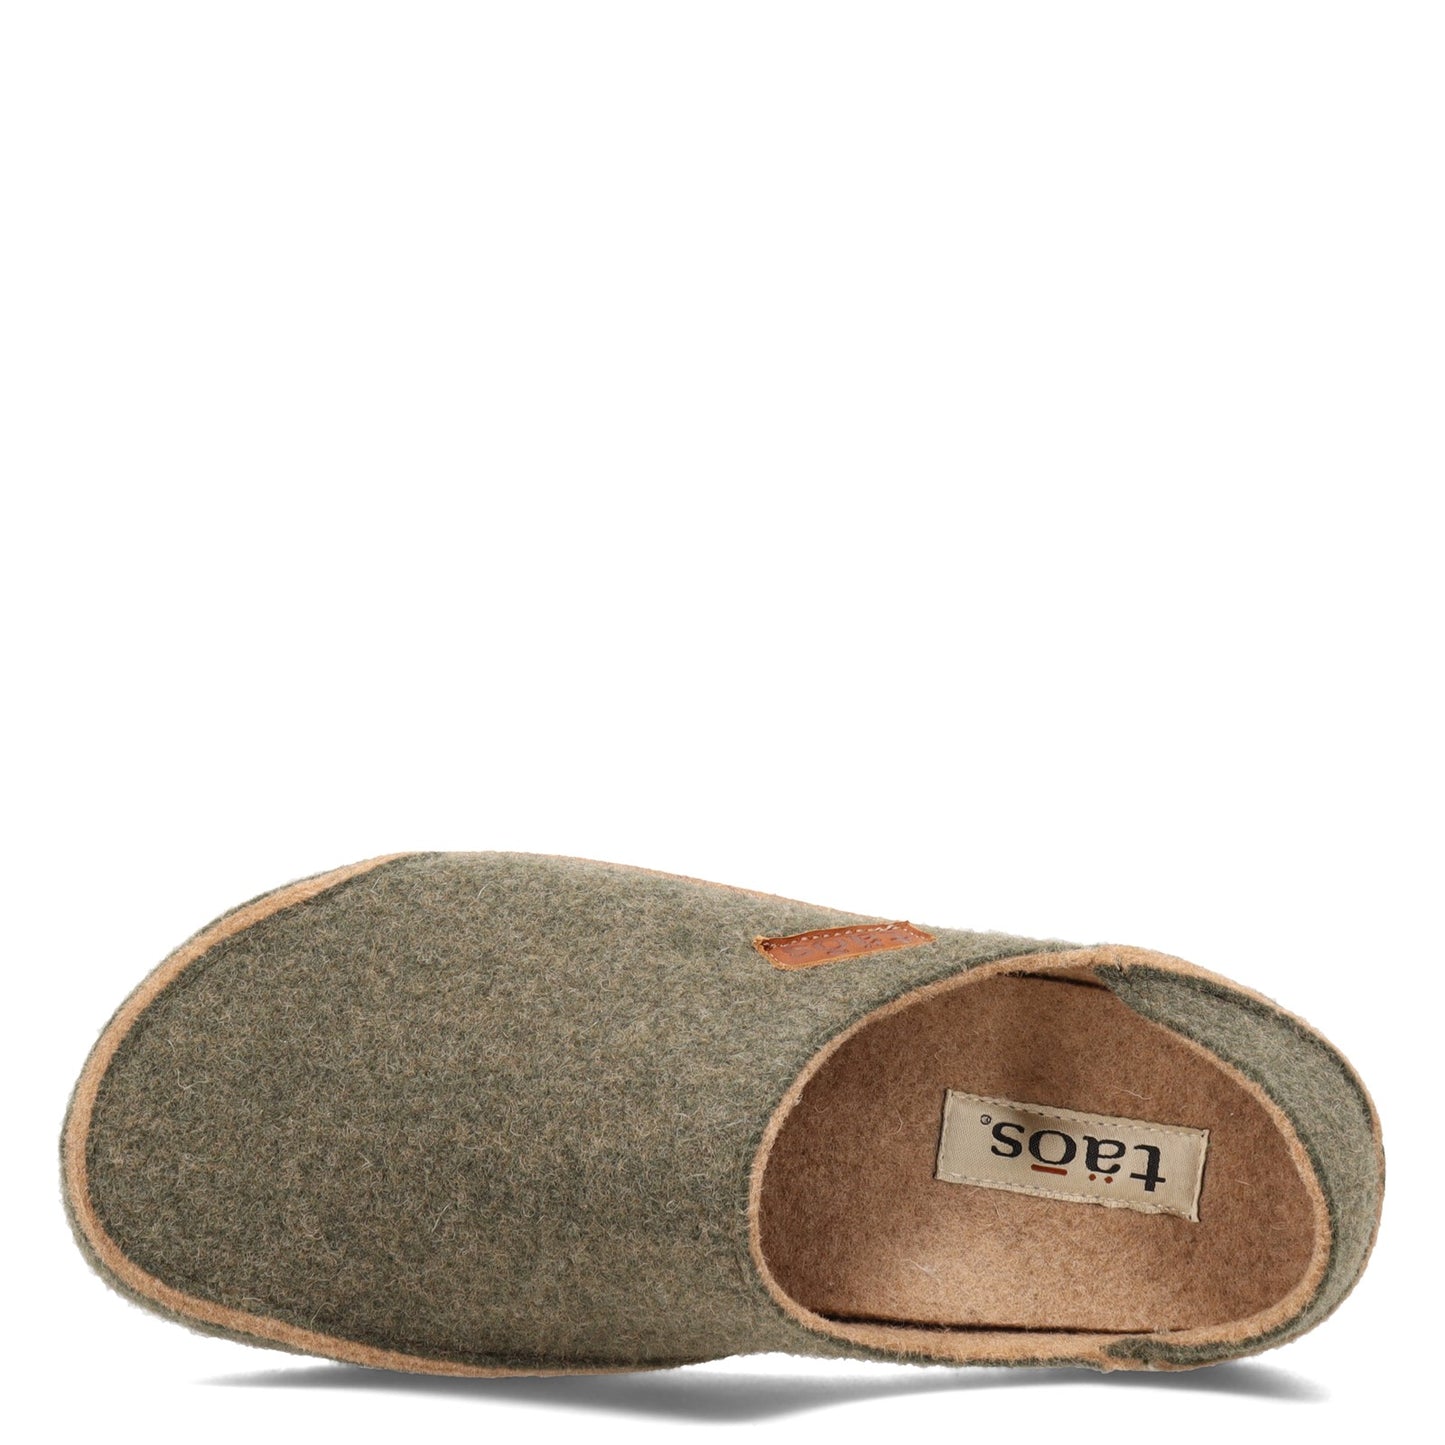 Peltz Shoes  Women's Taos Convertawool Slip-On Olive CNW-3303-OLV